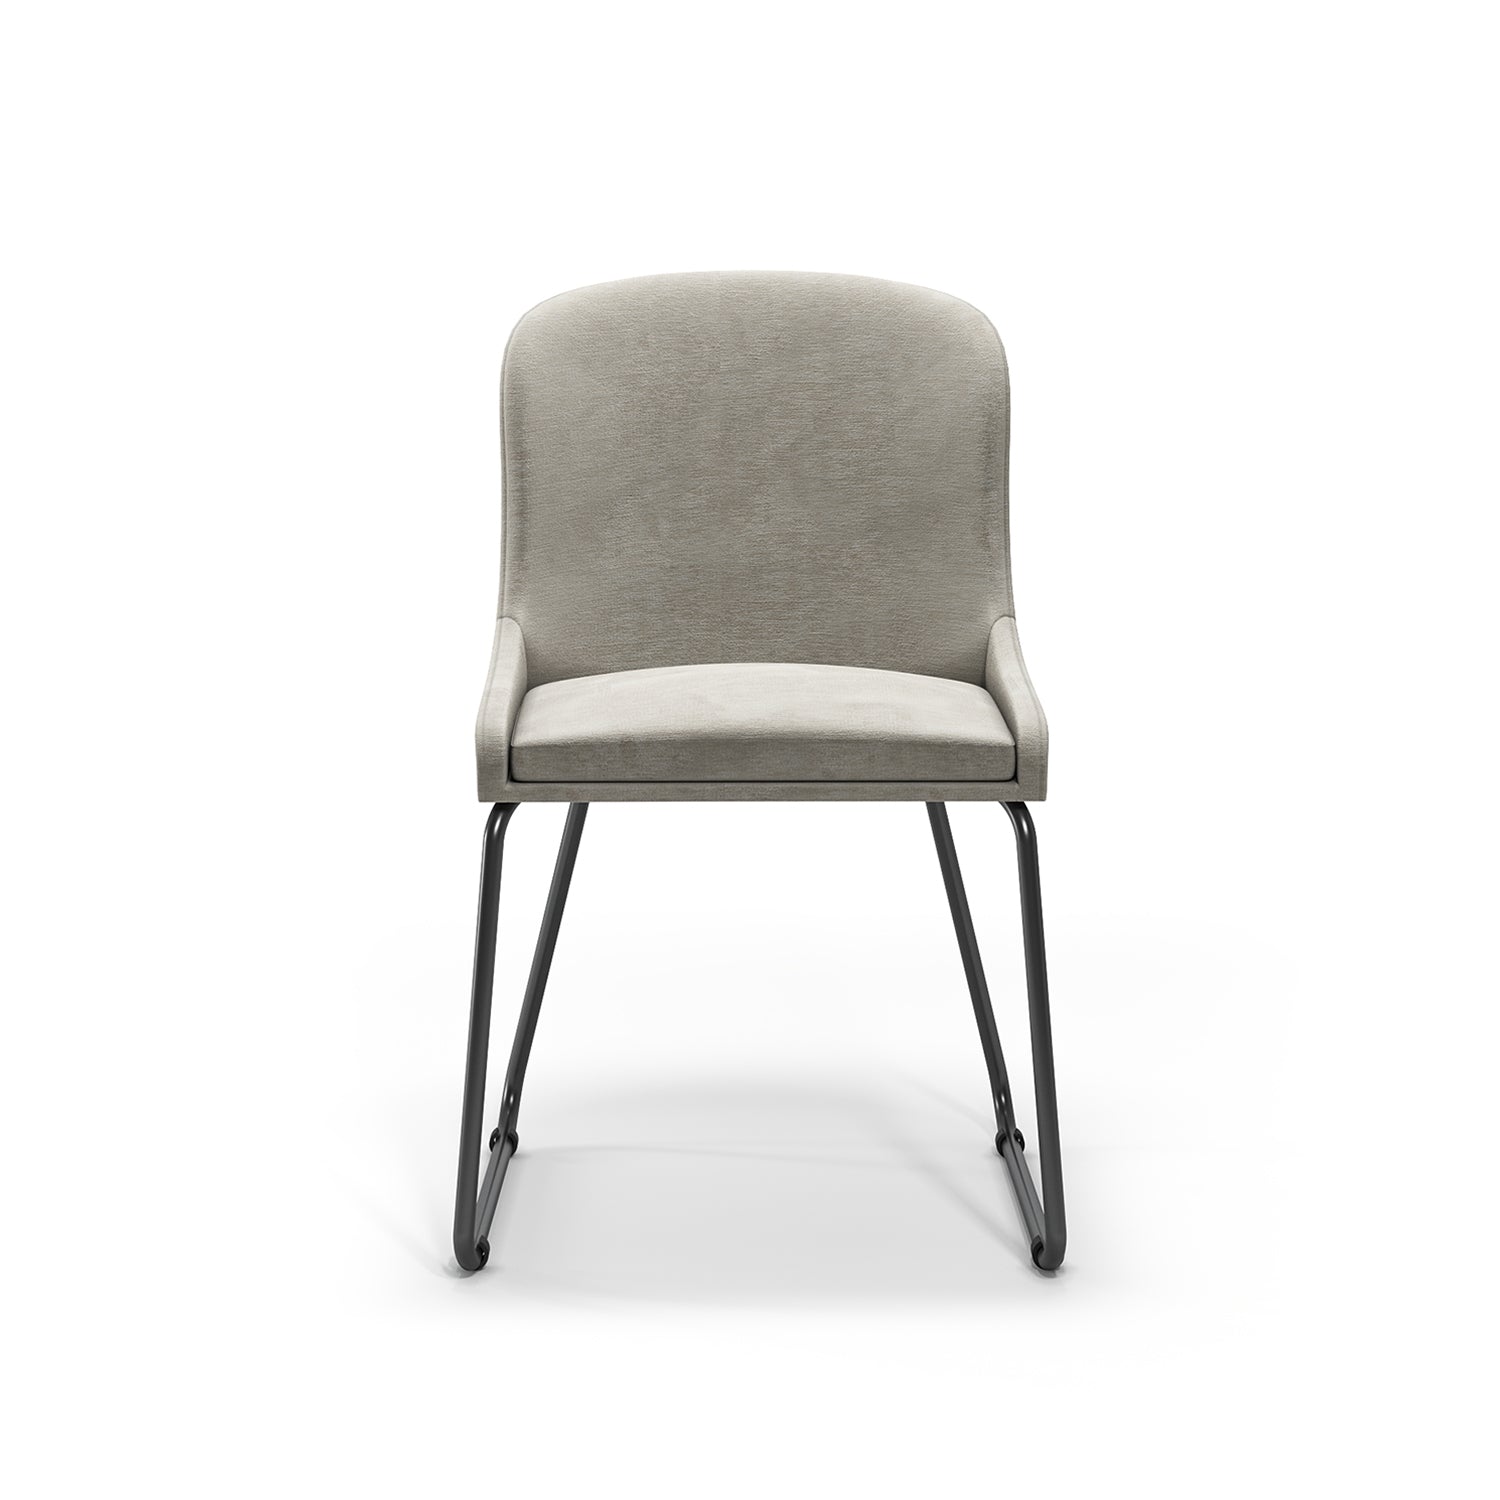 Designer Stuhl - Marco Metal L2 - verschiedene Farben